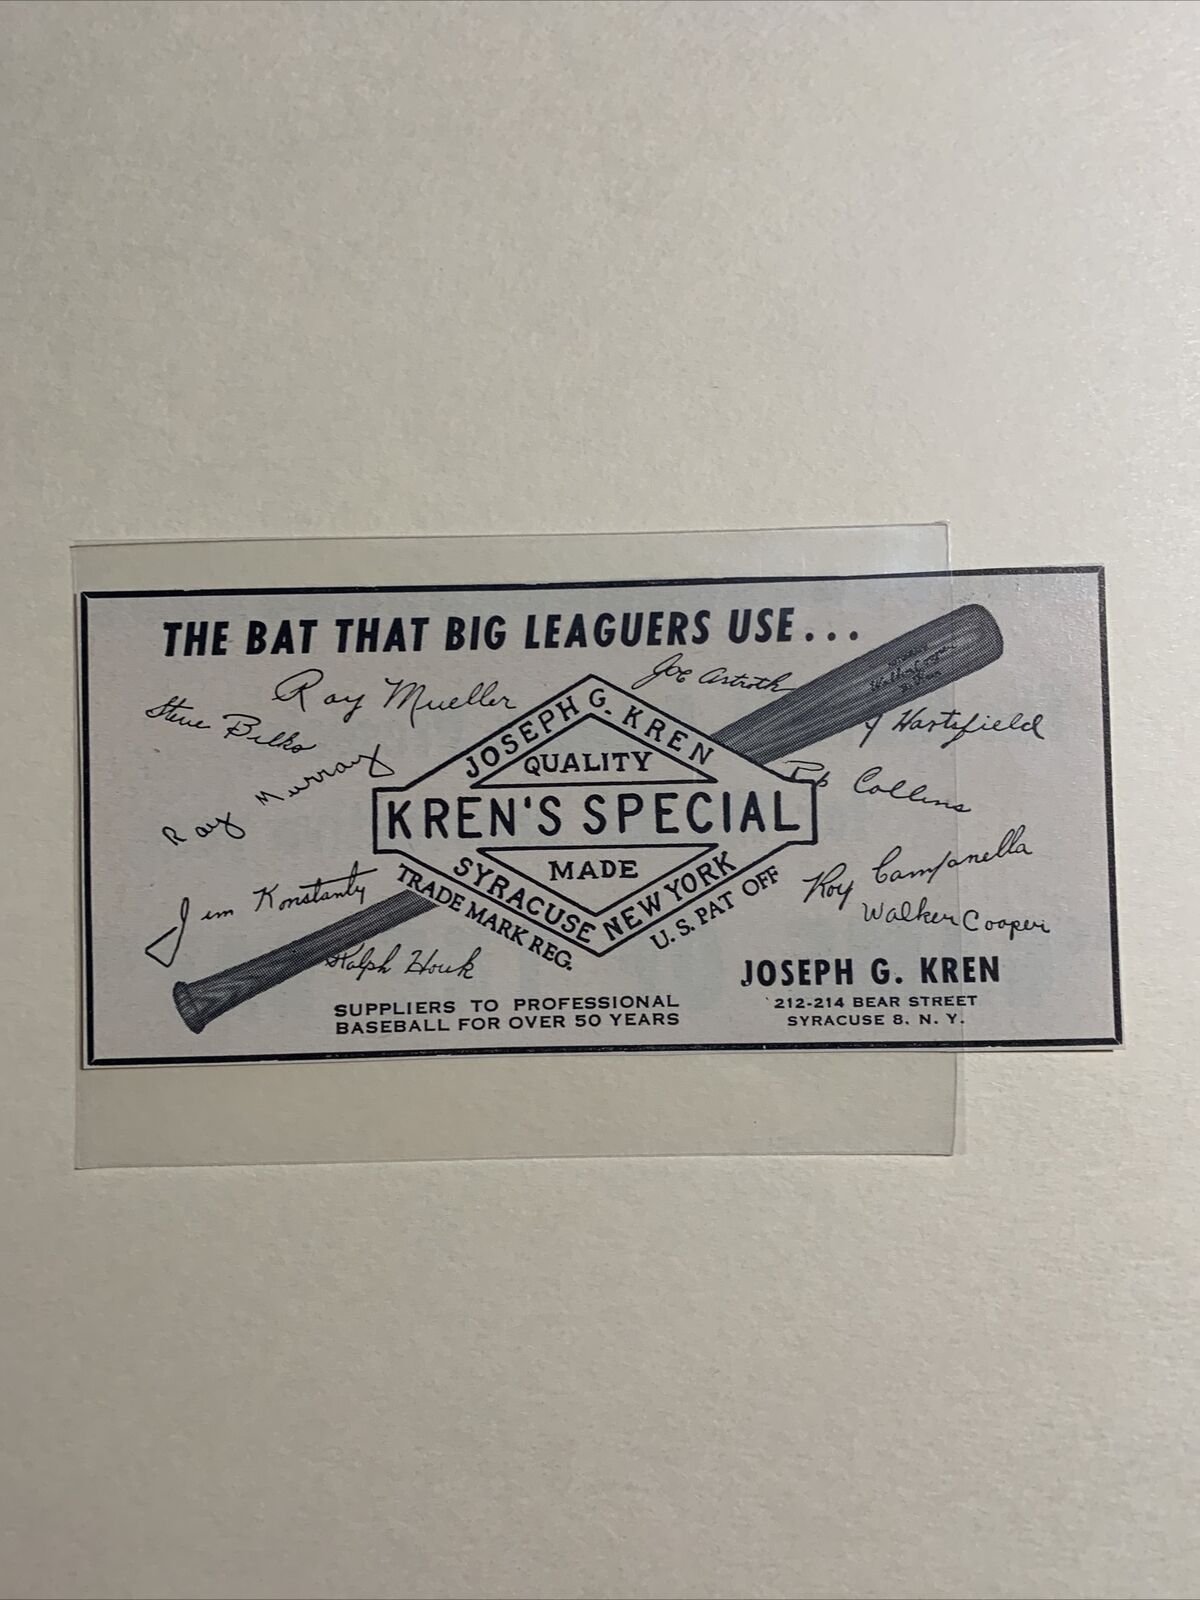 Kren’s Special Baseball Bats Ray Mueller Walker Cooper S. Bilko 1953 Baseball Ad